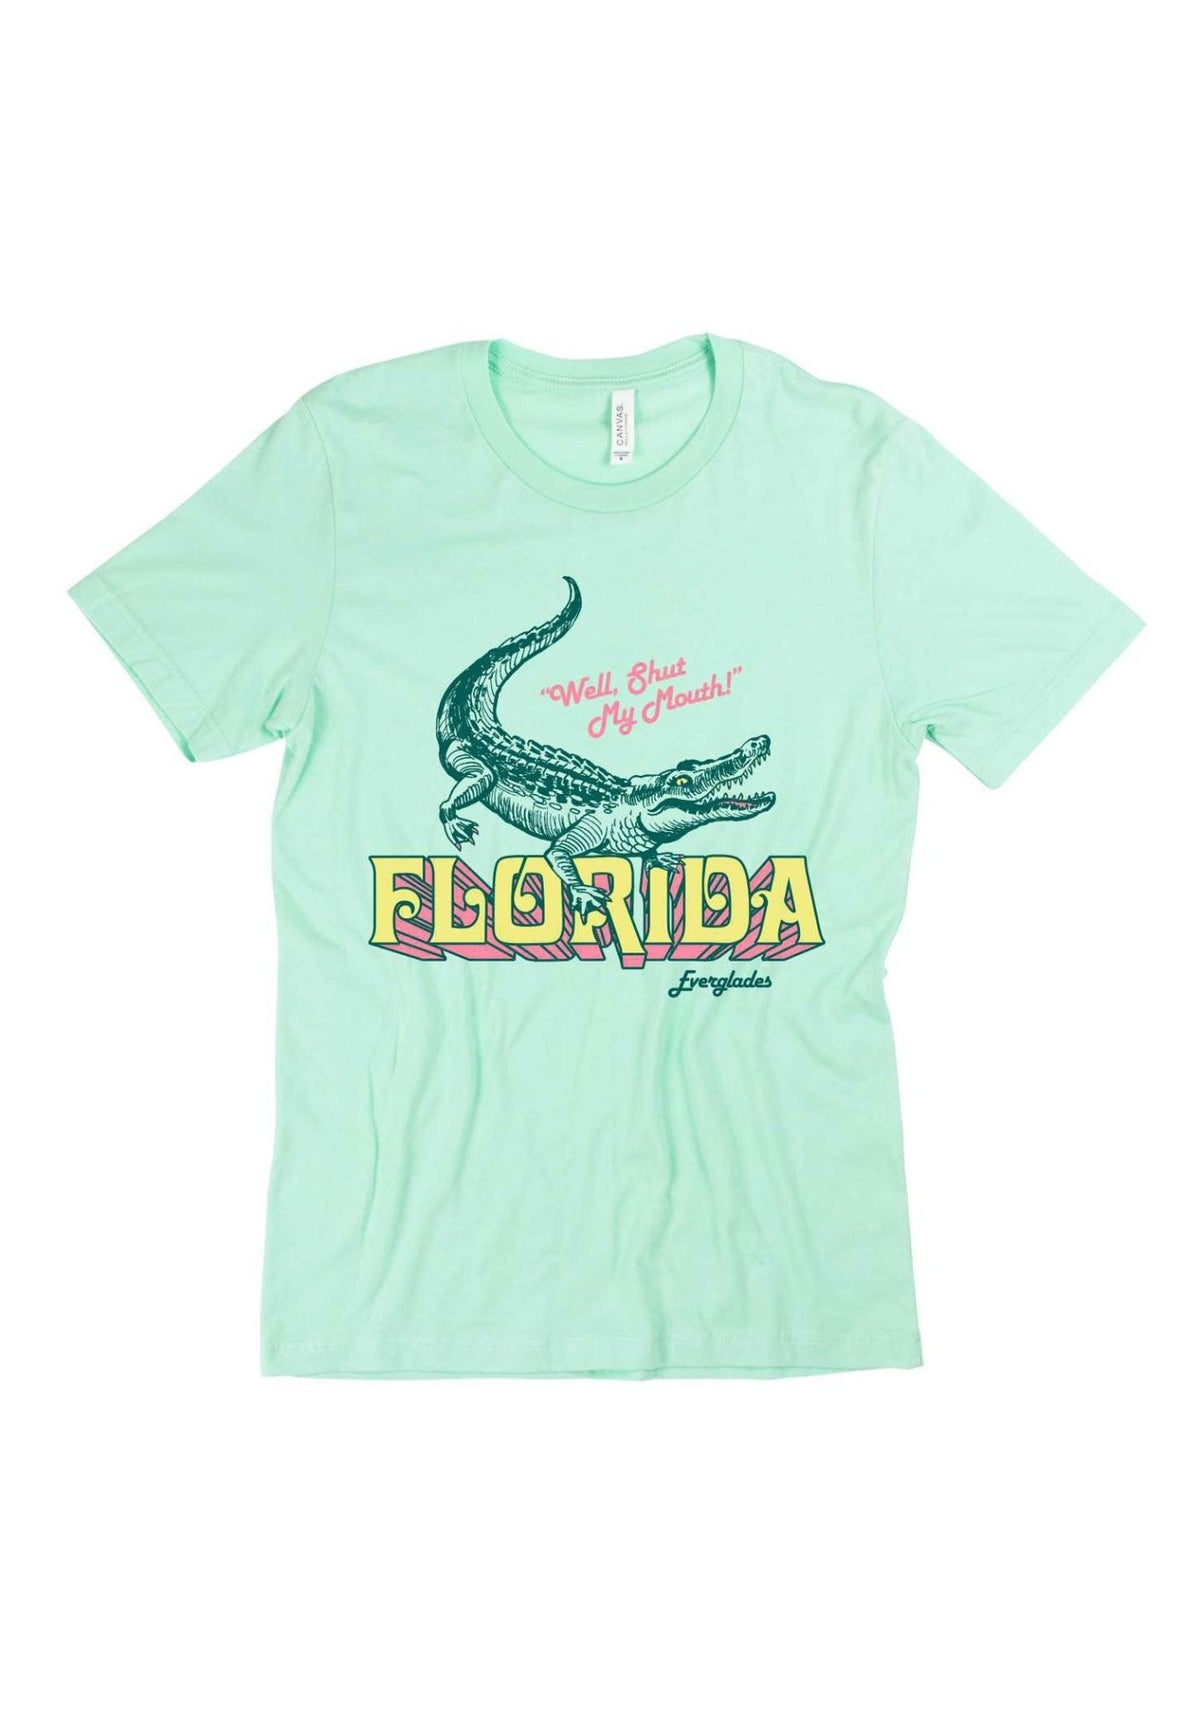 Sassy Gator Tee by kaeraz 70s shirt 70s style alligator